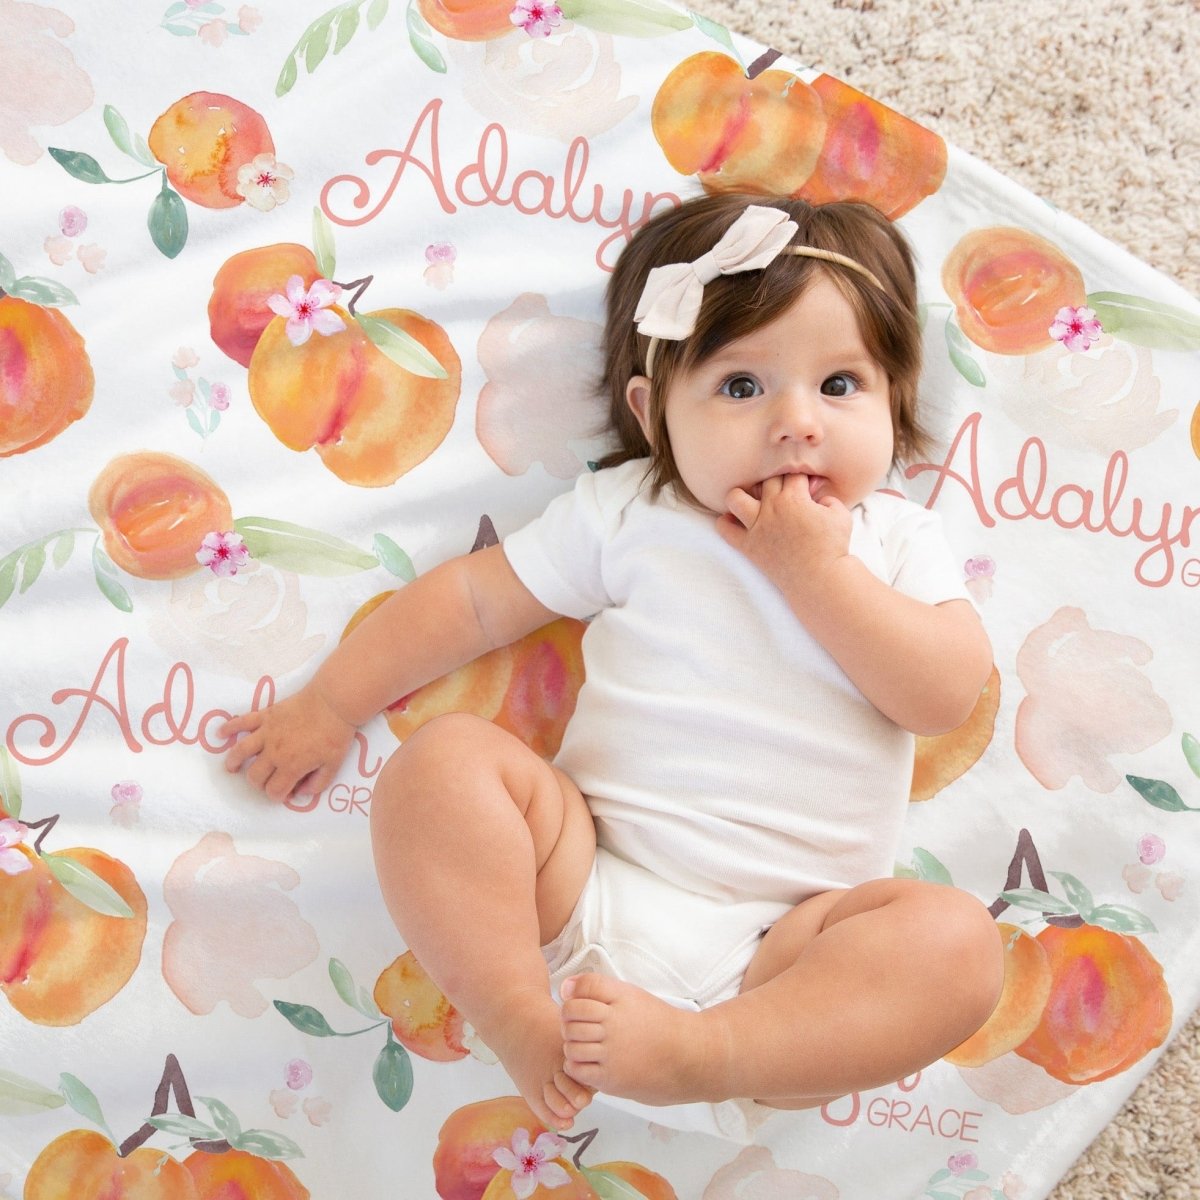 Sweet Georgia Peach Personalized Baby Blanket - gender_girl, Personalized_Yes, Sweet Georgia Peach